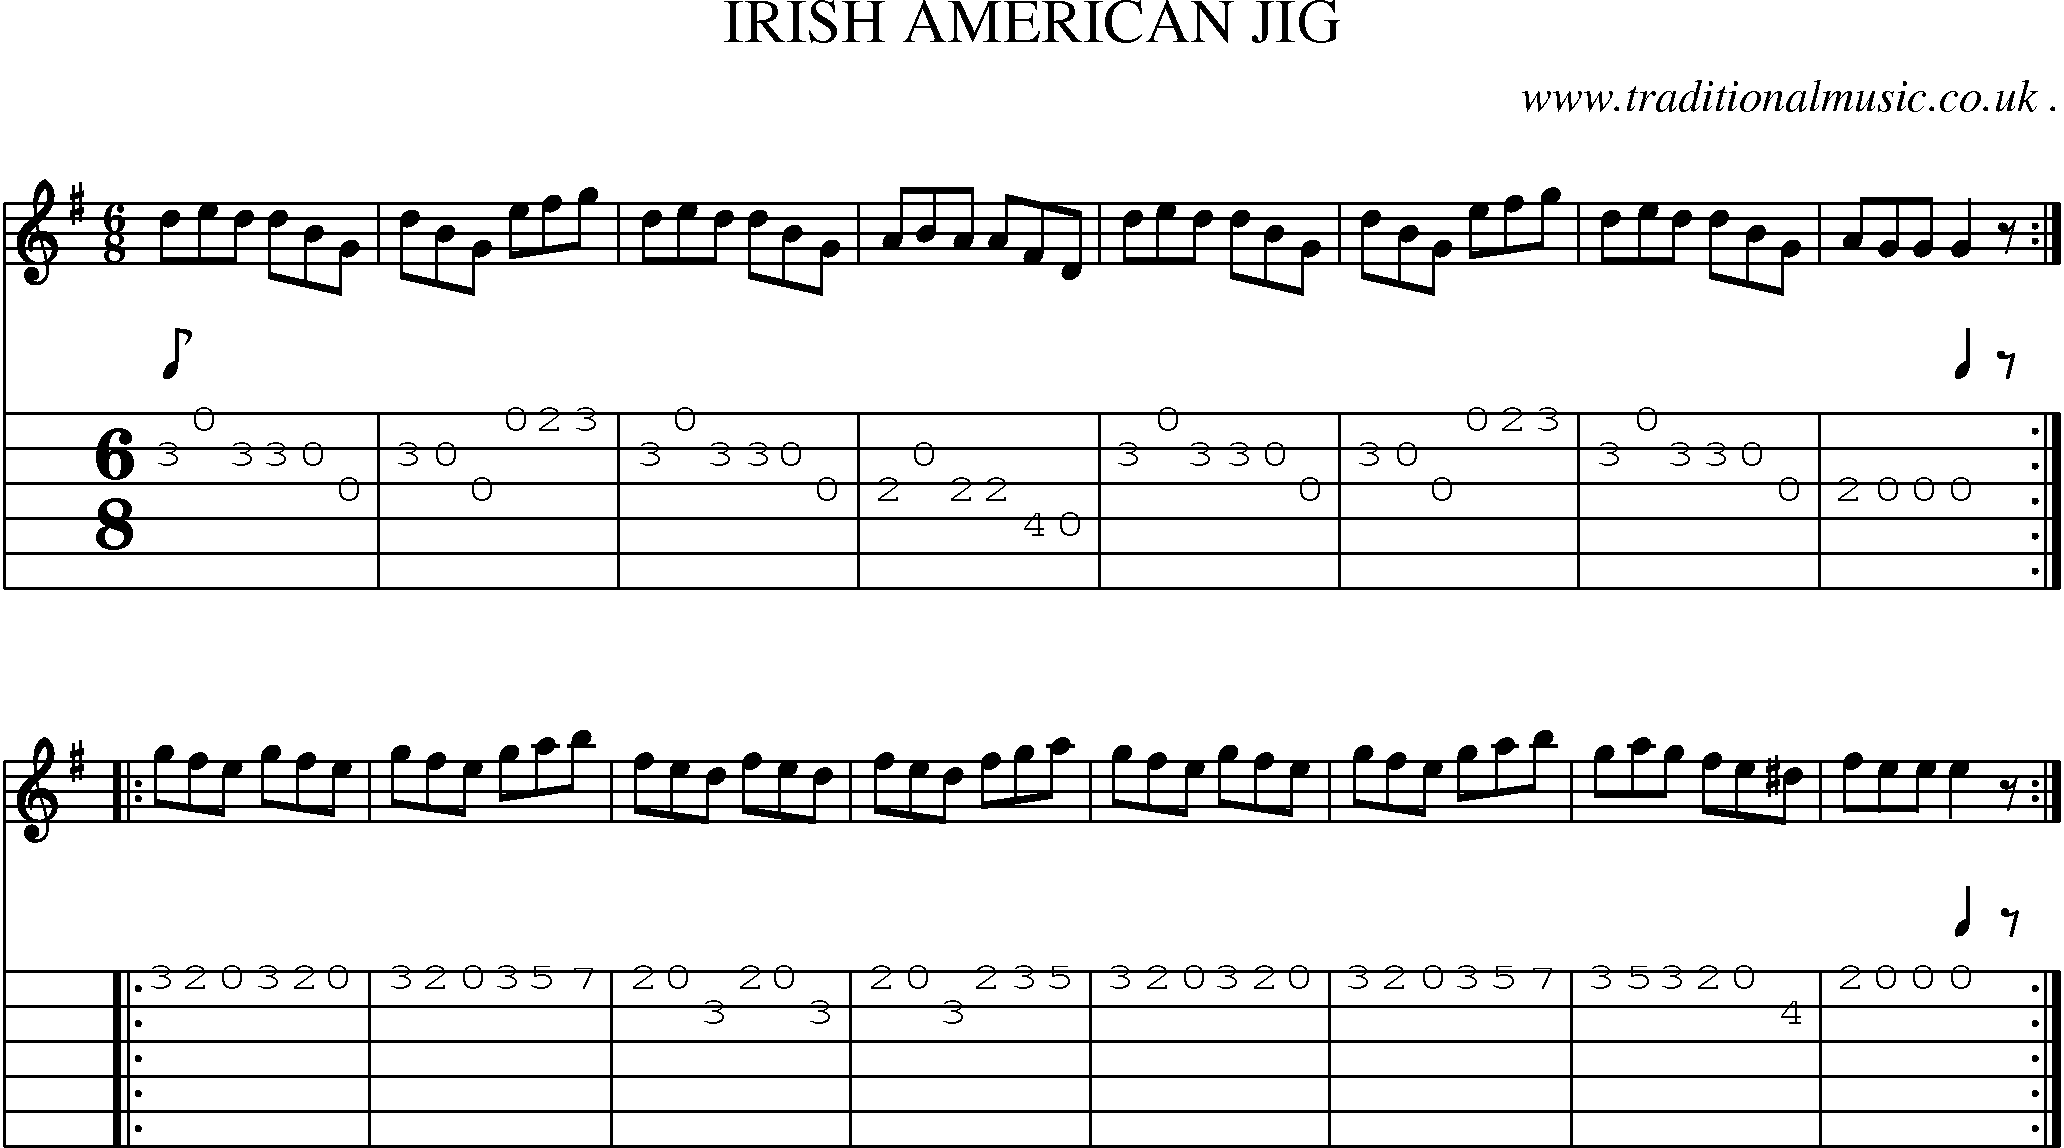 Sheet-Music and Guitar Tabs for Irish American Jig